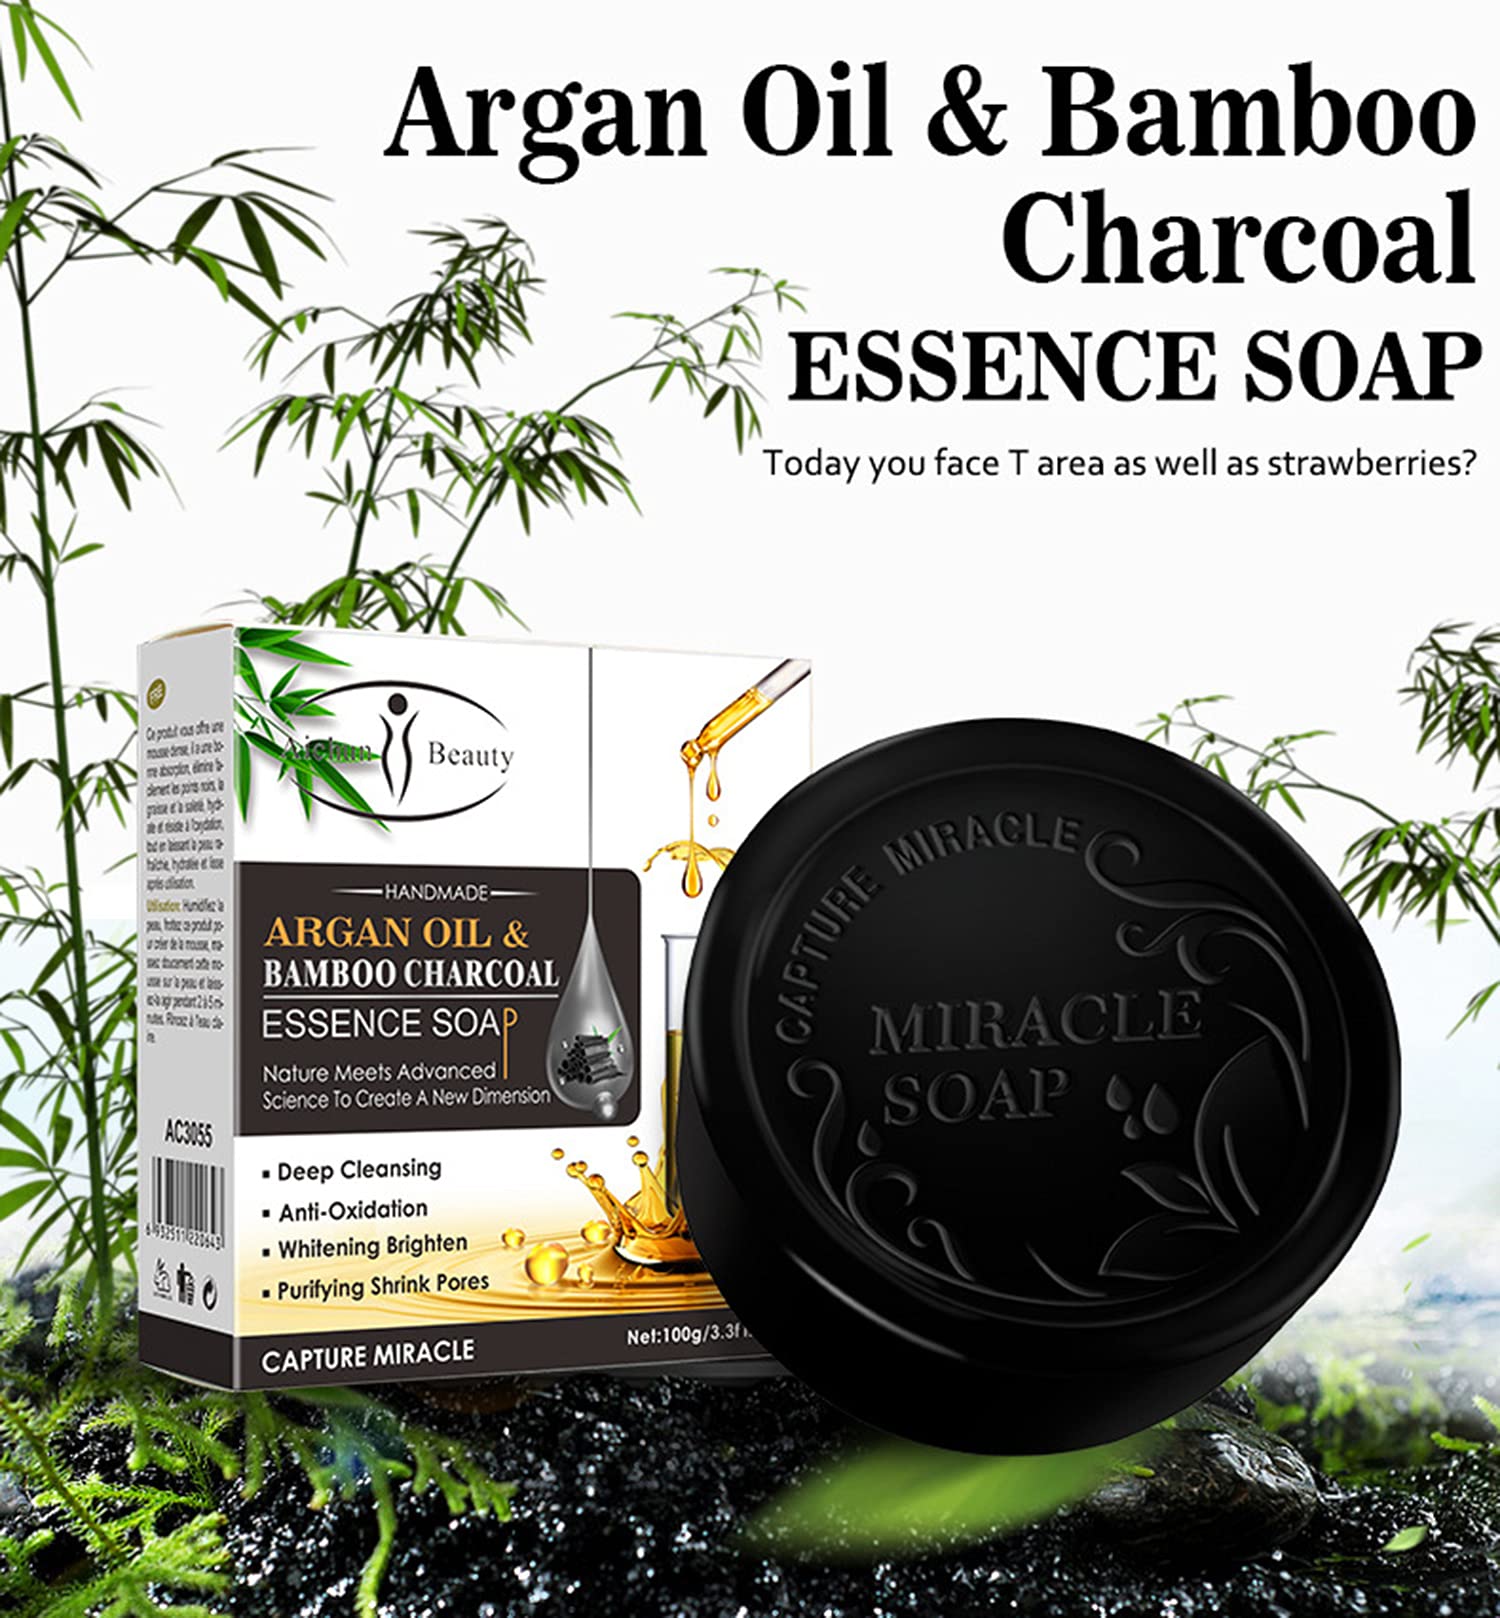 Argan Oil & Bamboo Charcoal Essence Soap